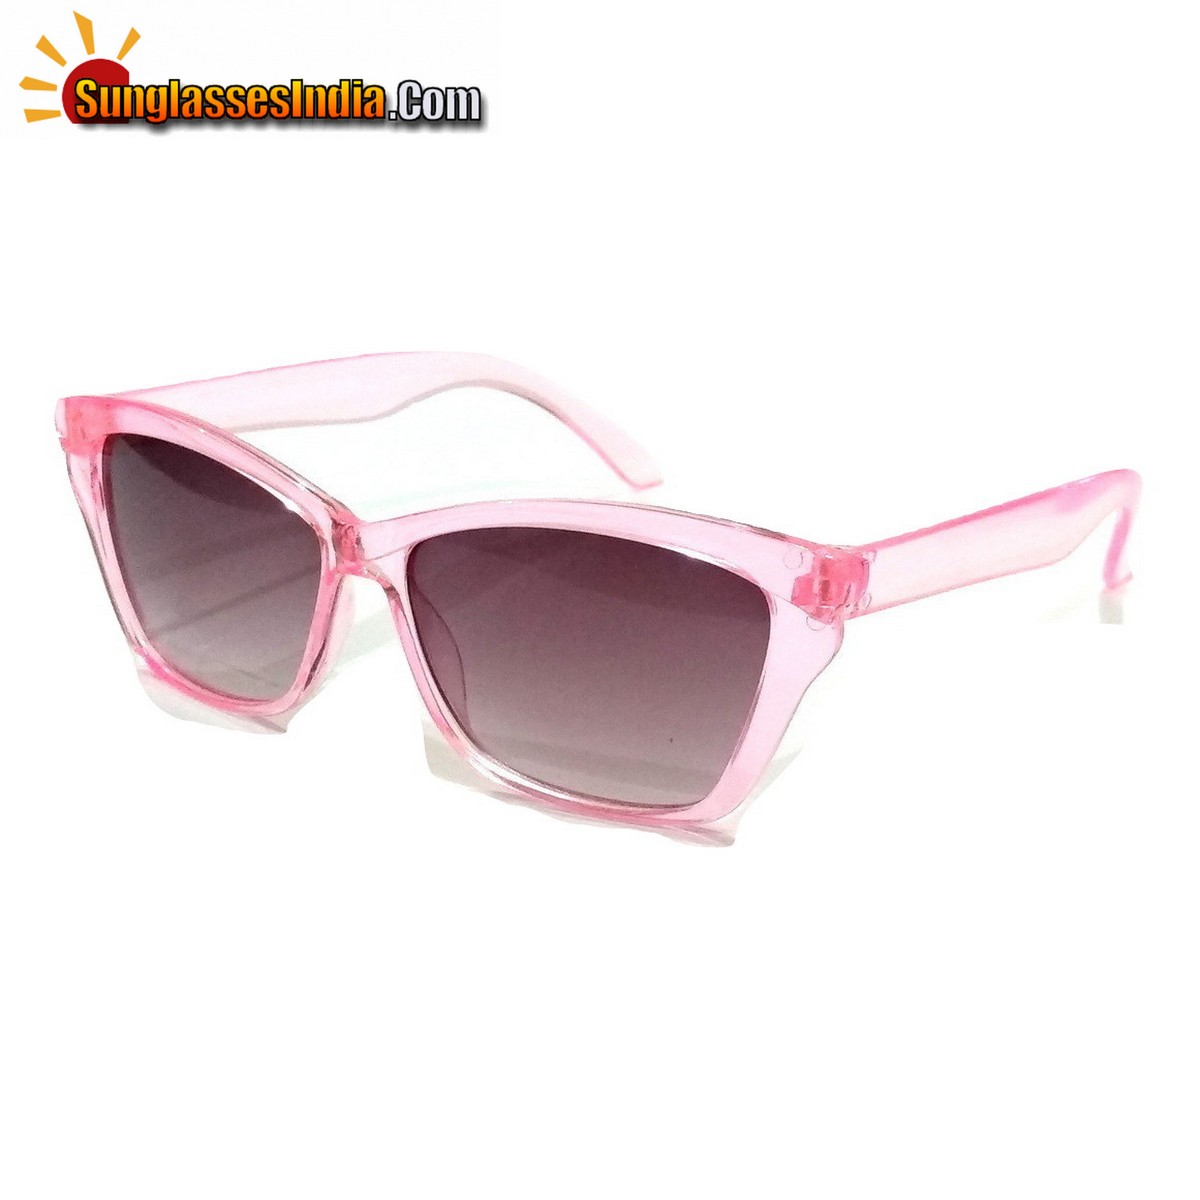 Kids Fashion Sunglasses TKS003LPink